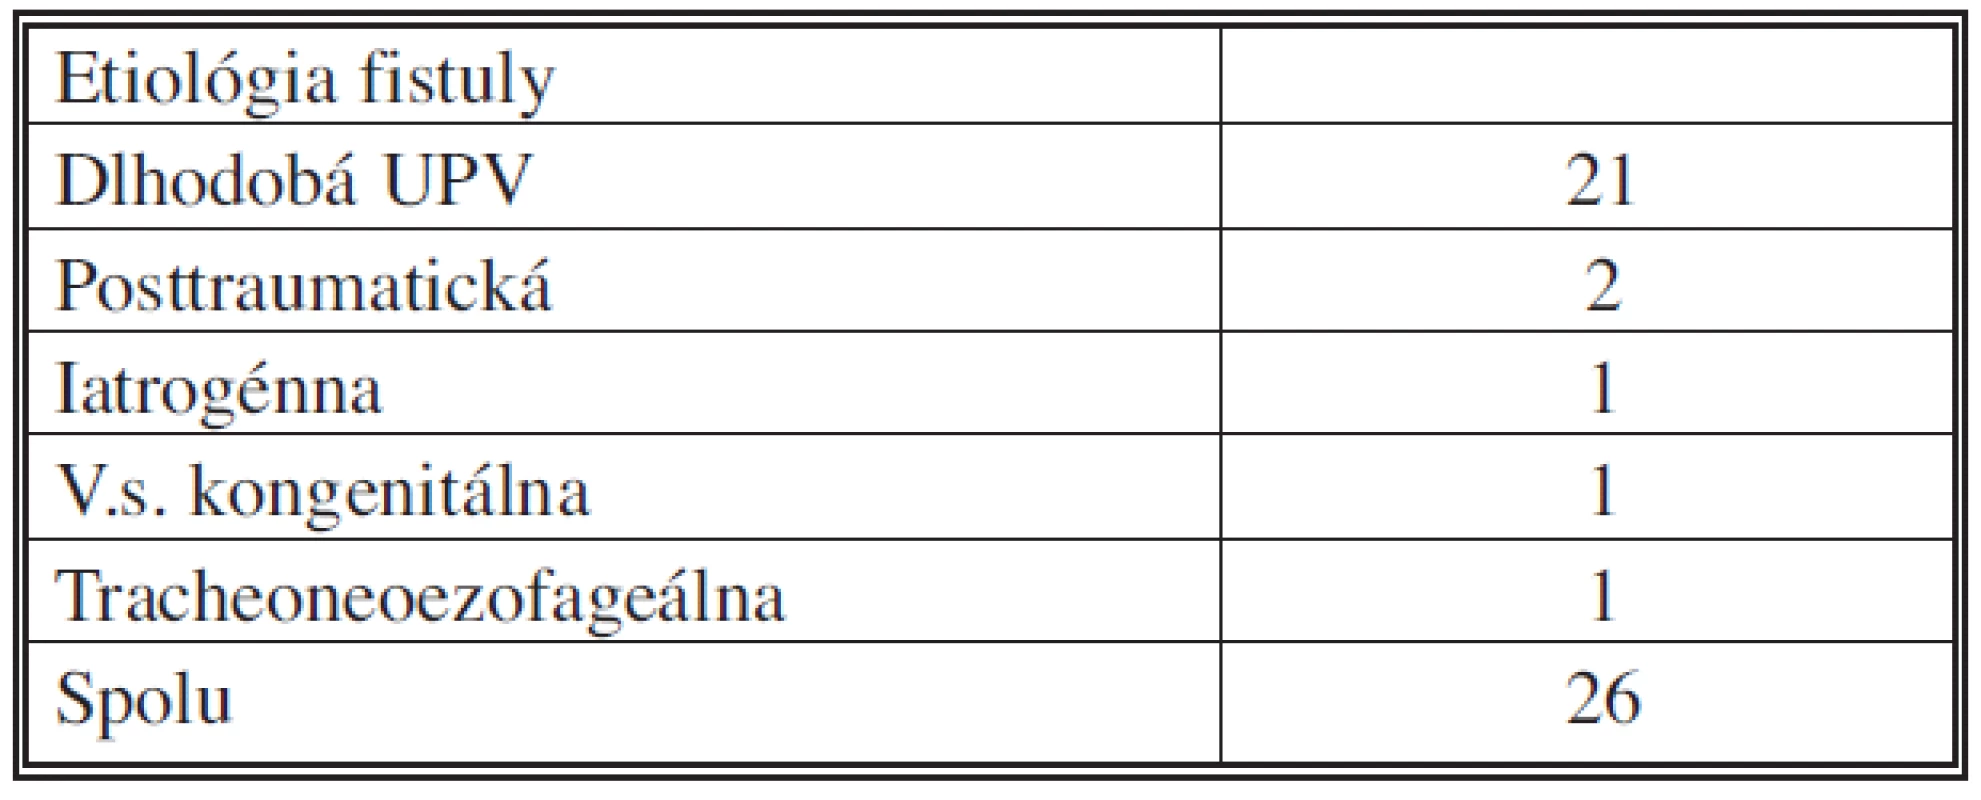 Etiológia tracheoezofageálnych fistúl v našom súbore pacientov 1995–2010. UPV – umelá pľucna ventilácia
Tab. 1. Etiology of tracheoesophageal fistules in the patient group 1995–2010. UPV – mechanical ventilation